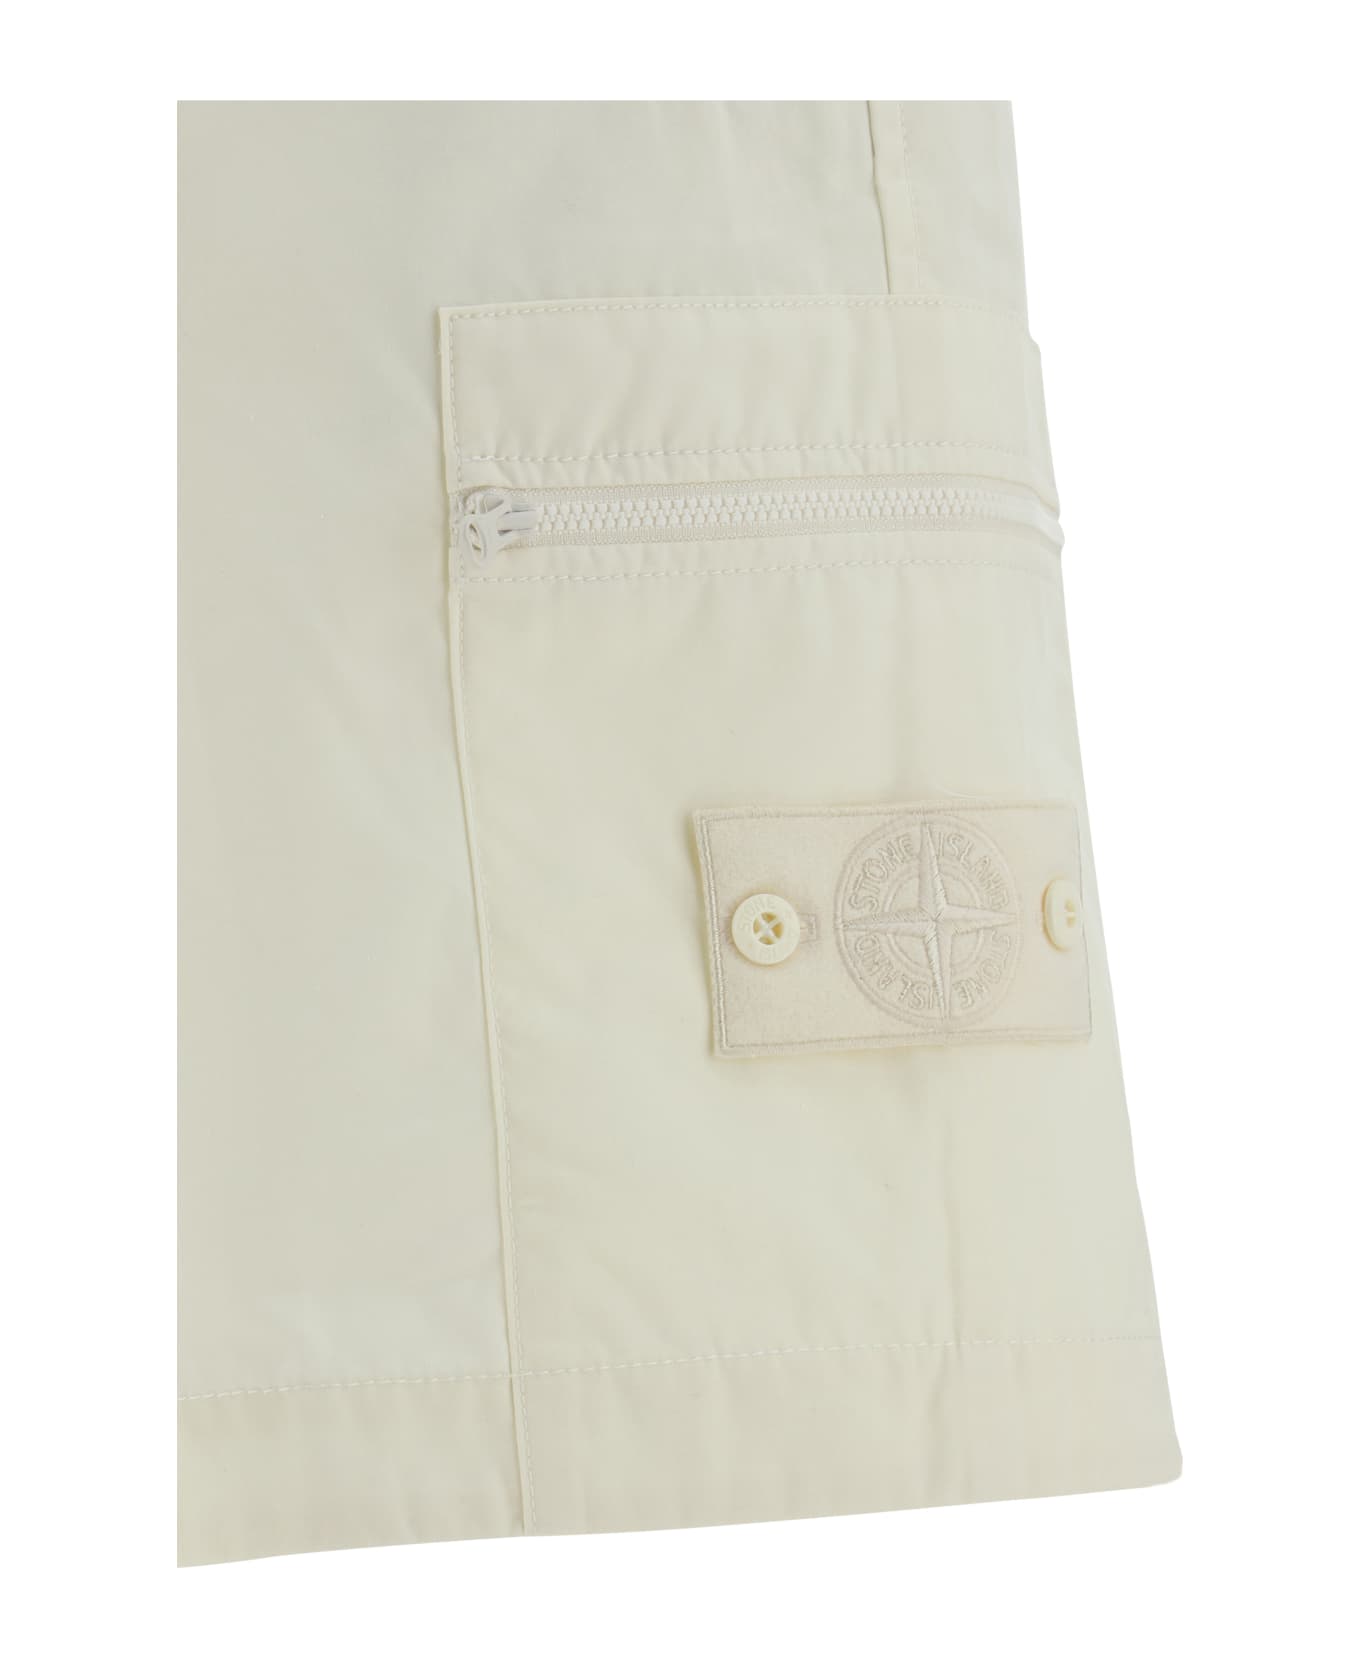 Stone Island Cargo Bermuda Shorts - White ショートパンツ